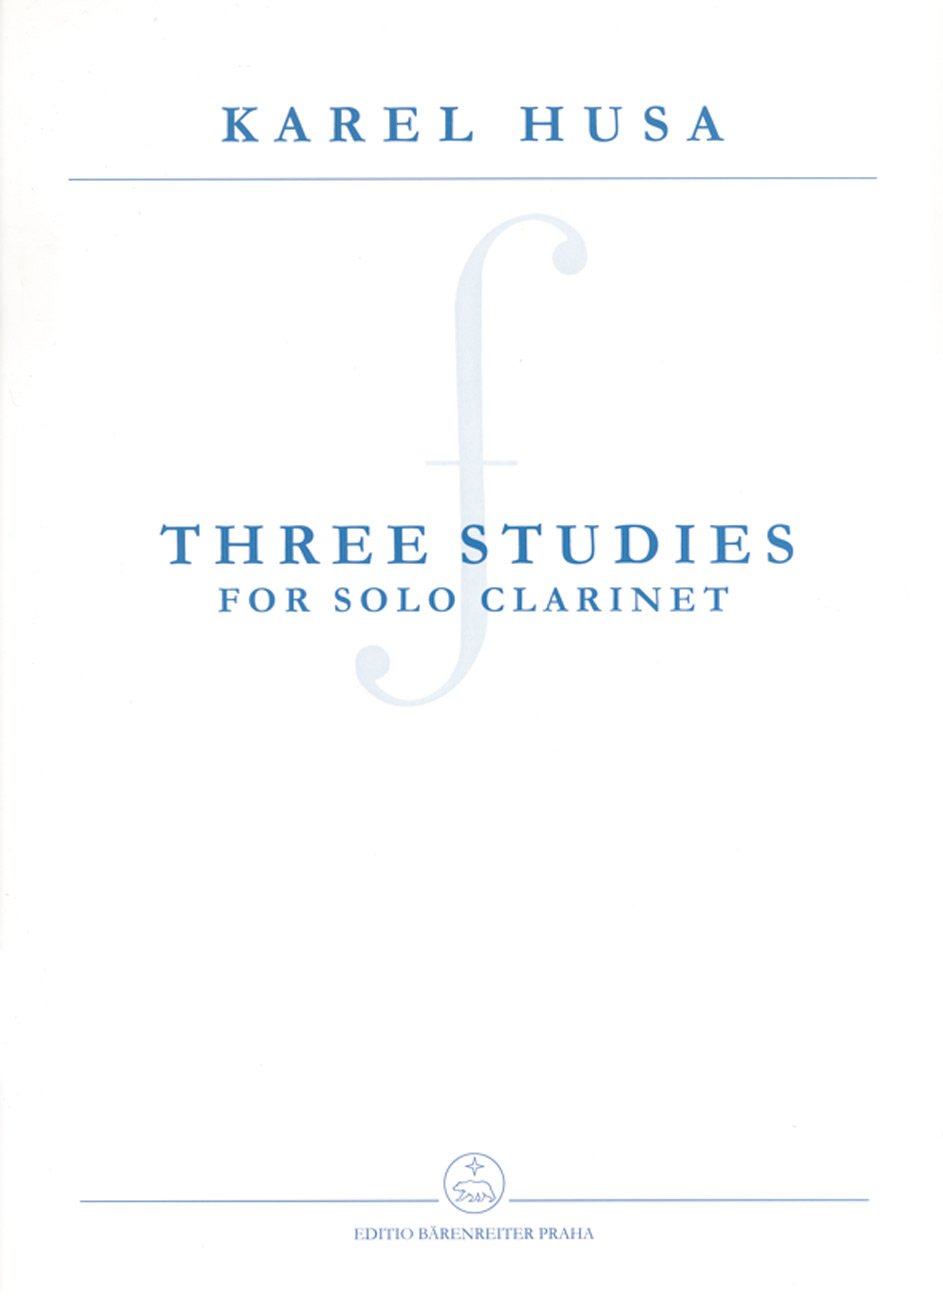 Three Studies (2007) para clarinete solo. Karel Husa